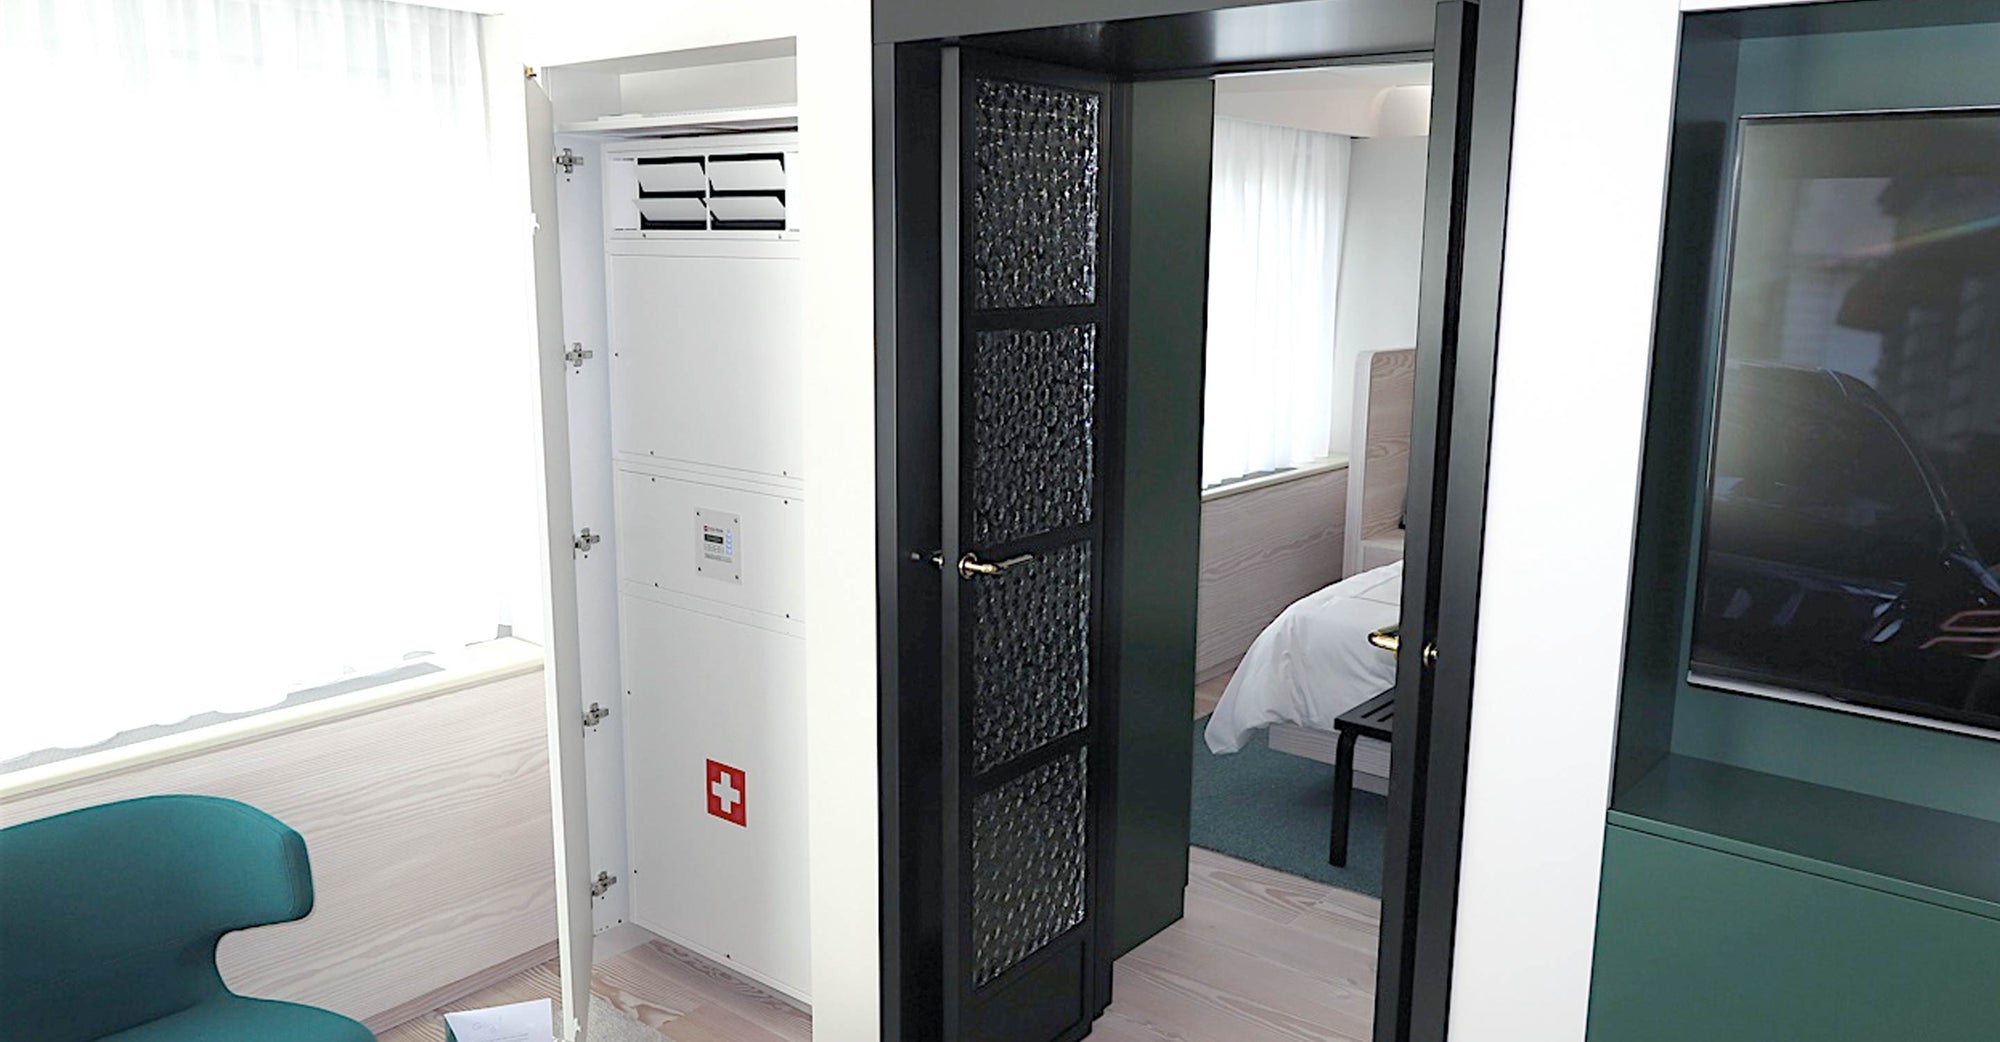 IQAir delivers clean air to guests in Swissôtel vitality room